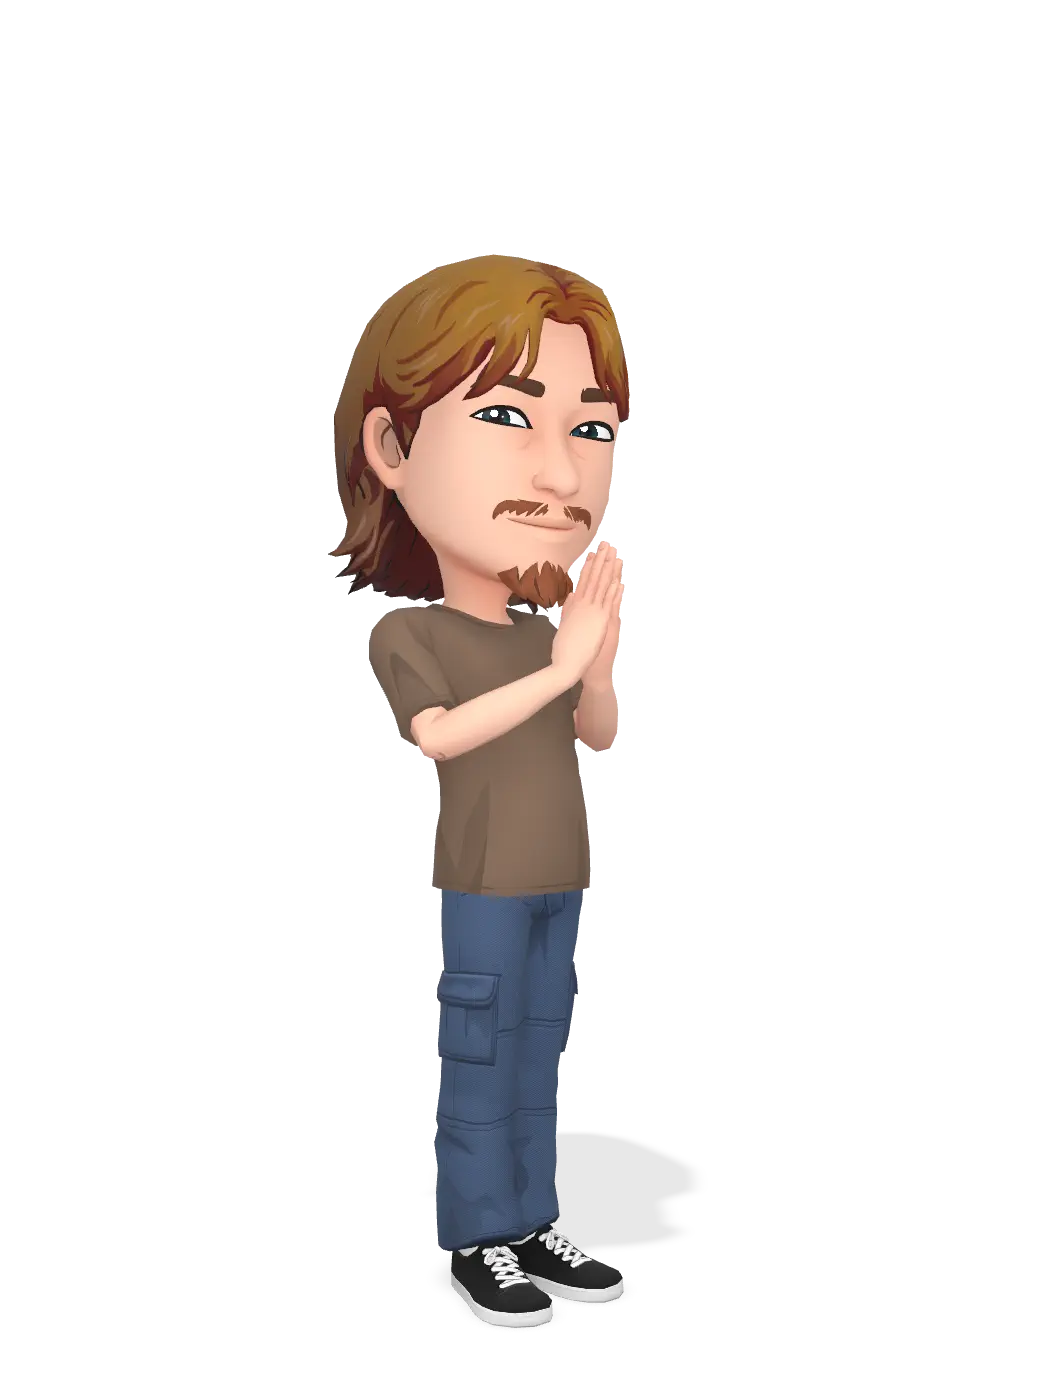 3D Bitmoji for milanjacobn avatar